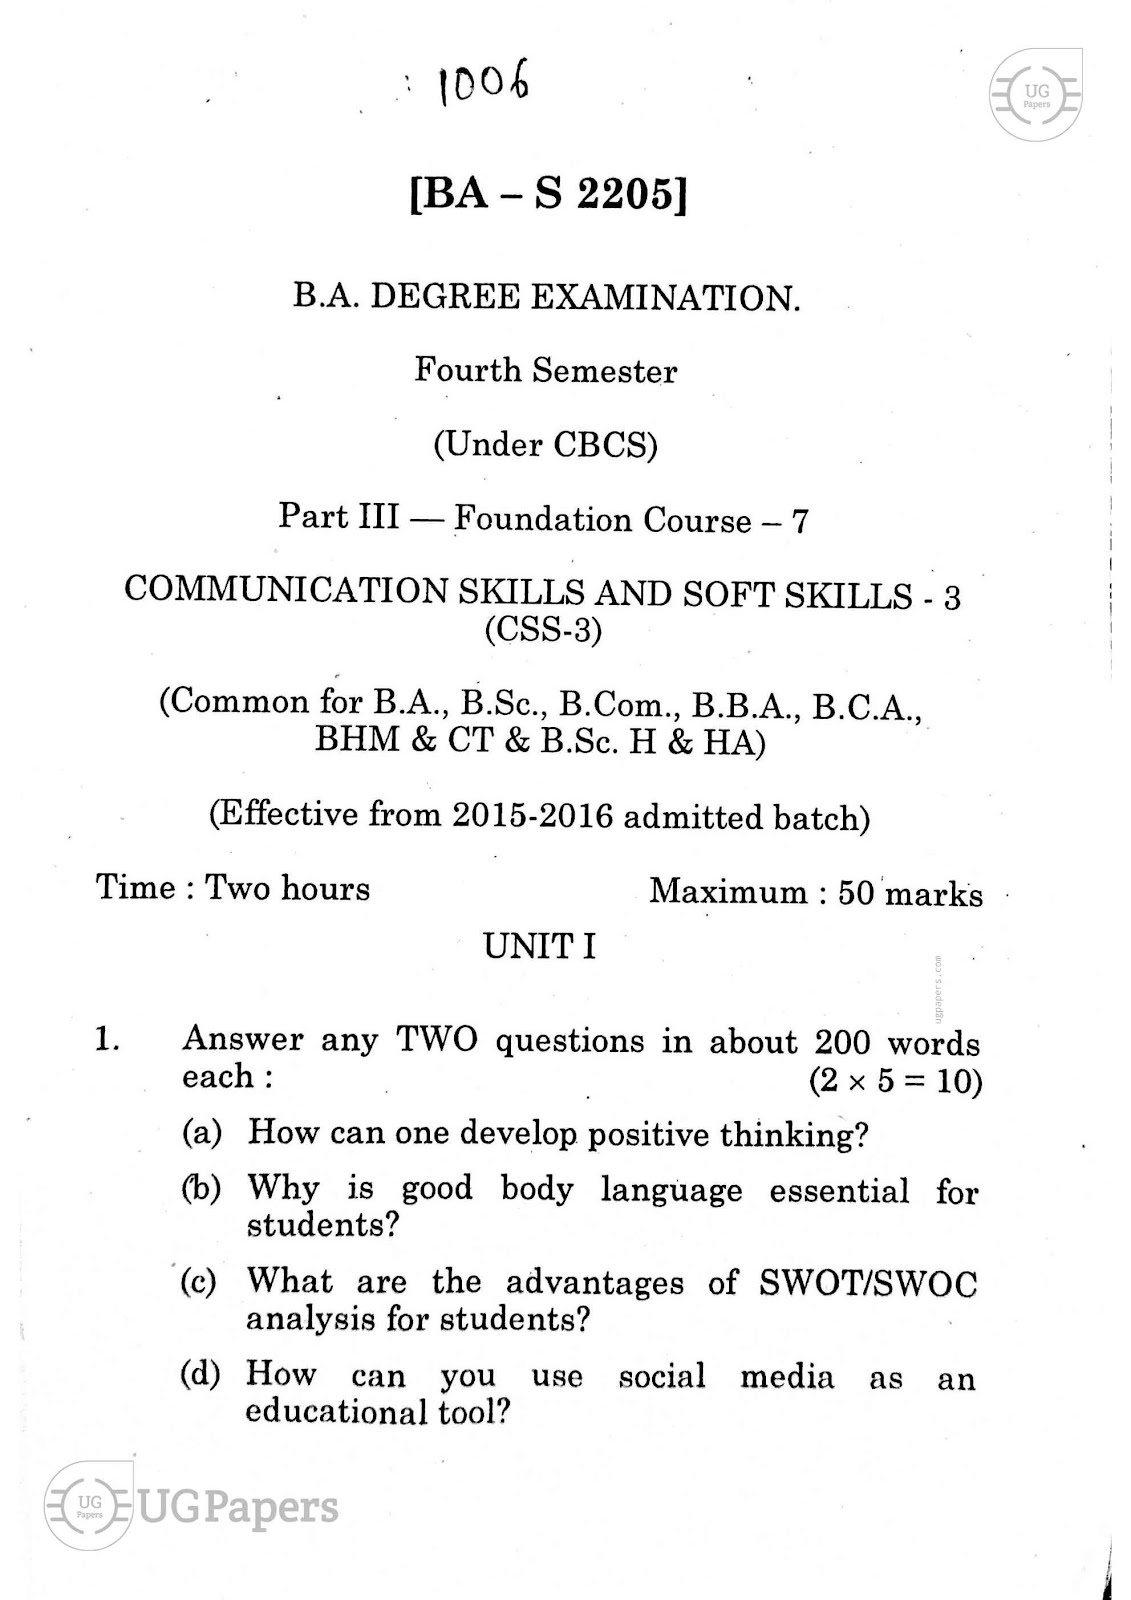 ugpapers.com, Andhra University, Semester 4, CSS 2020